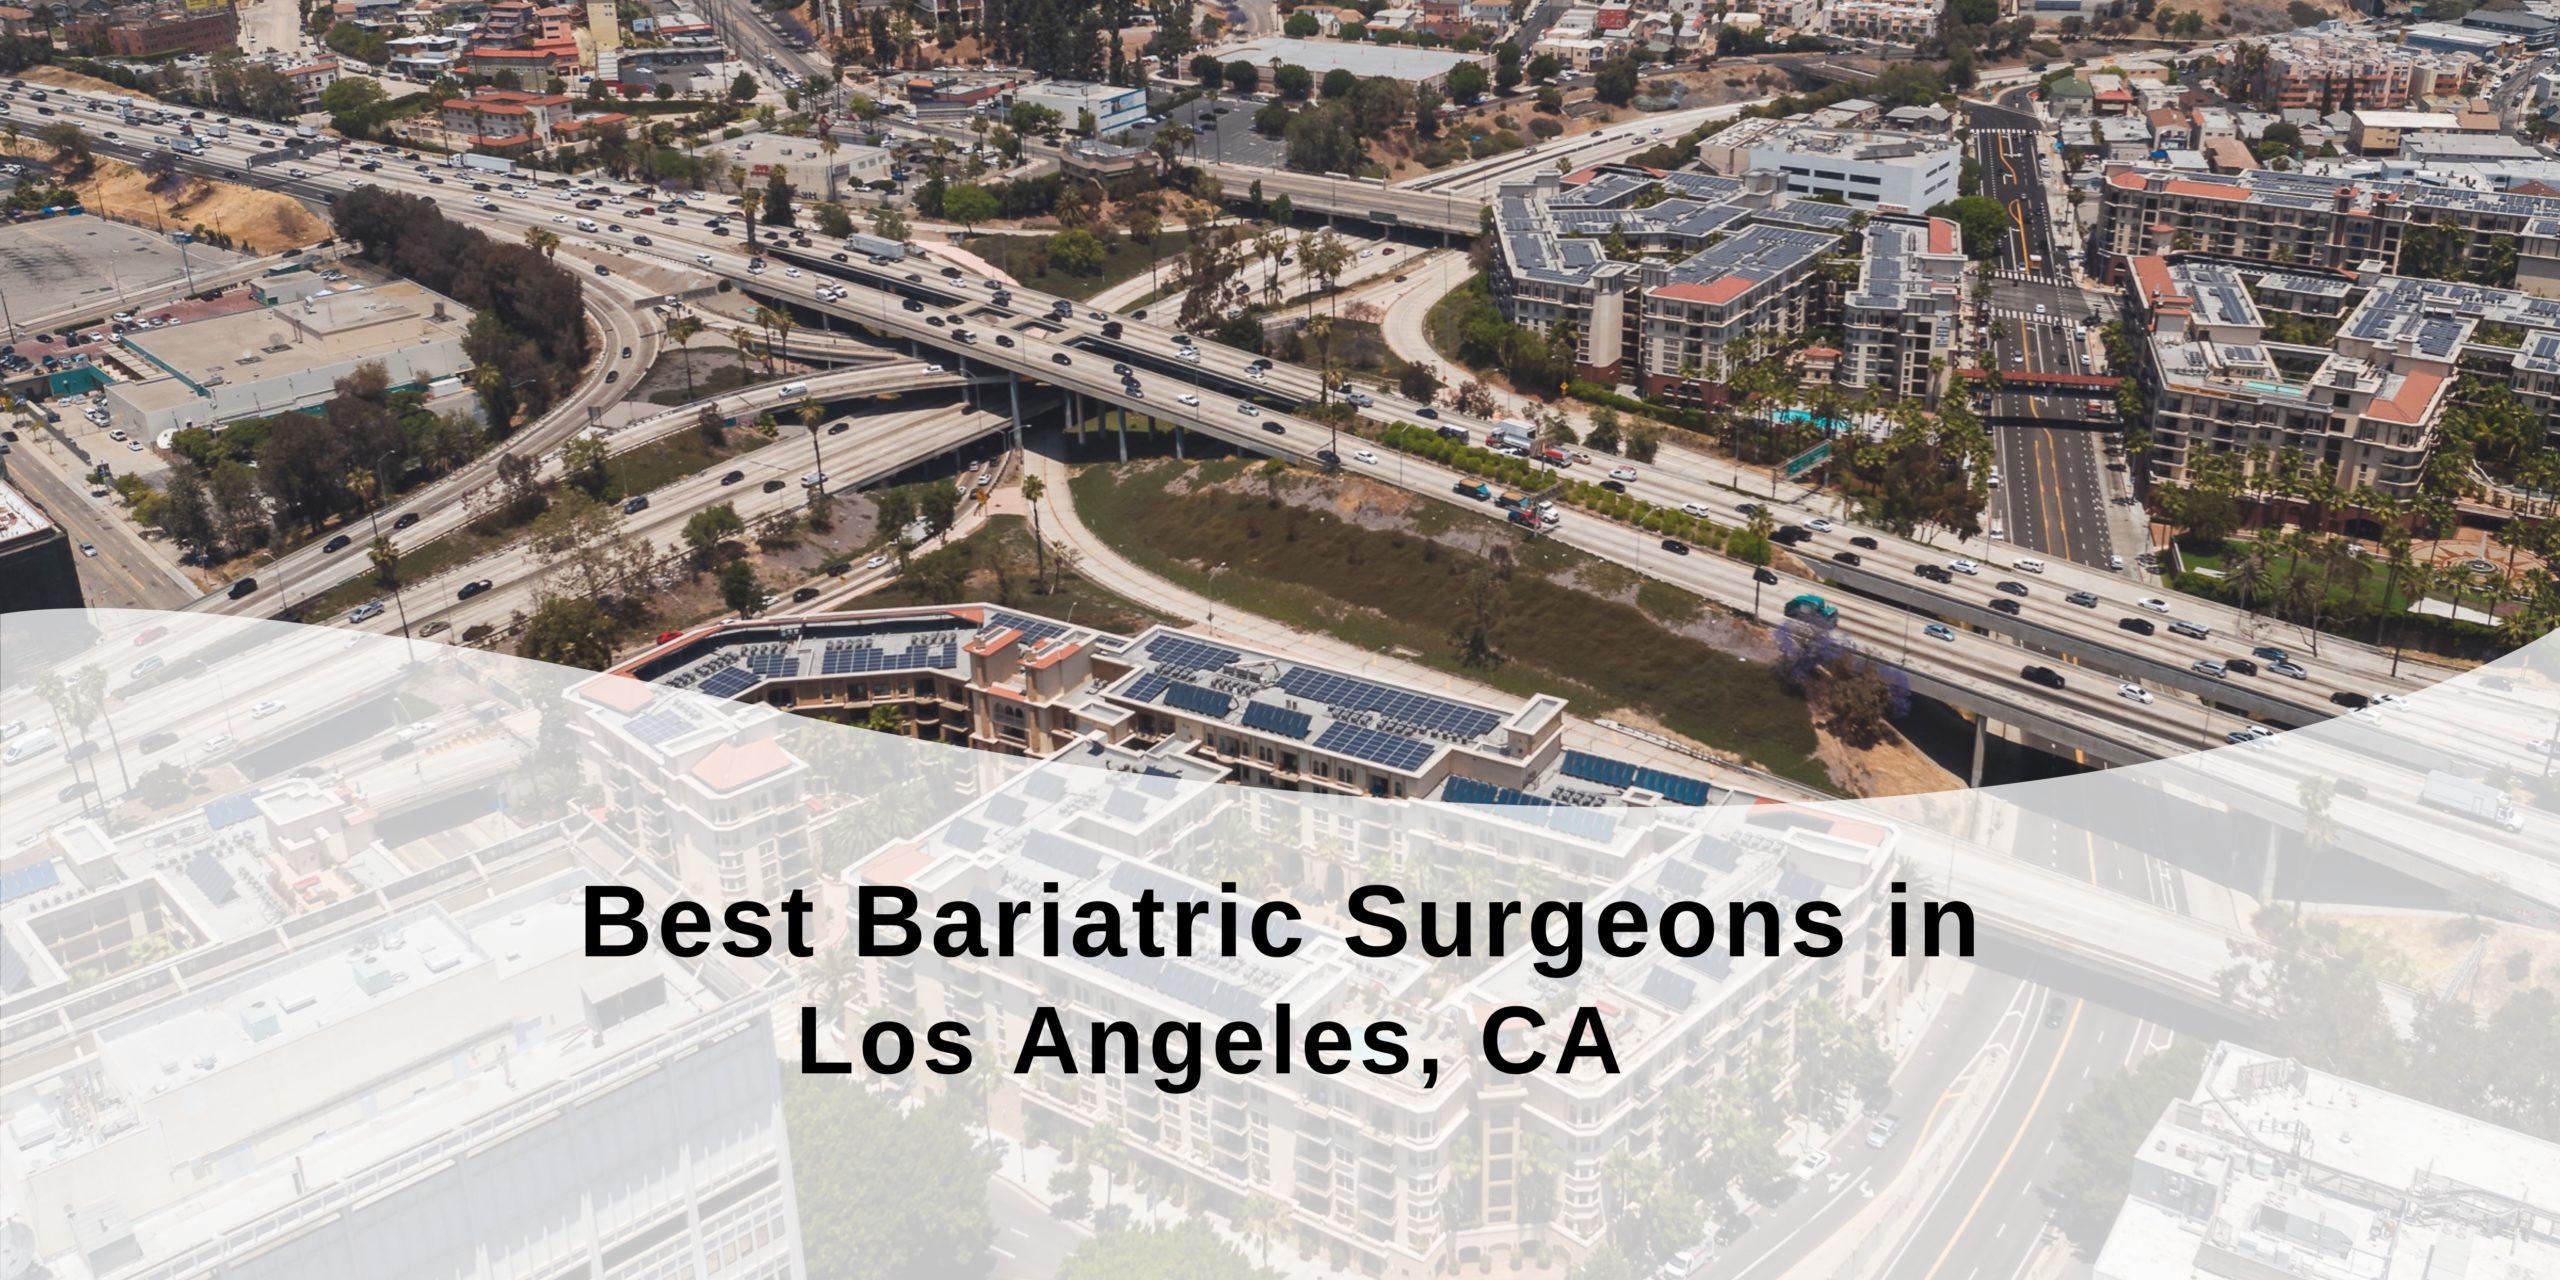 Best bariatric surgeons in los angeles, CA